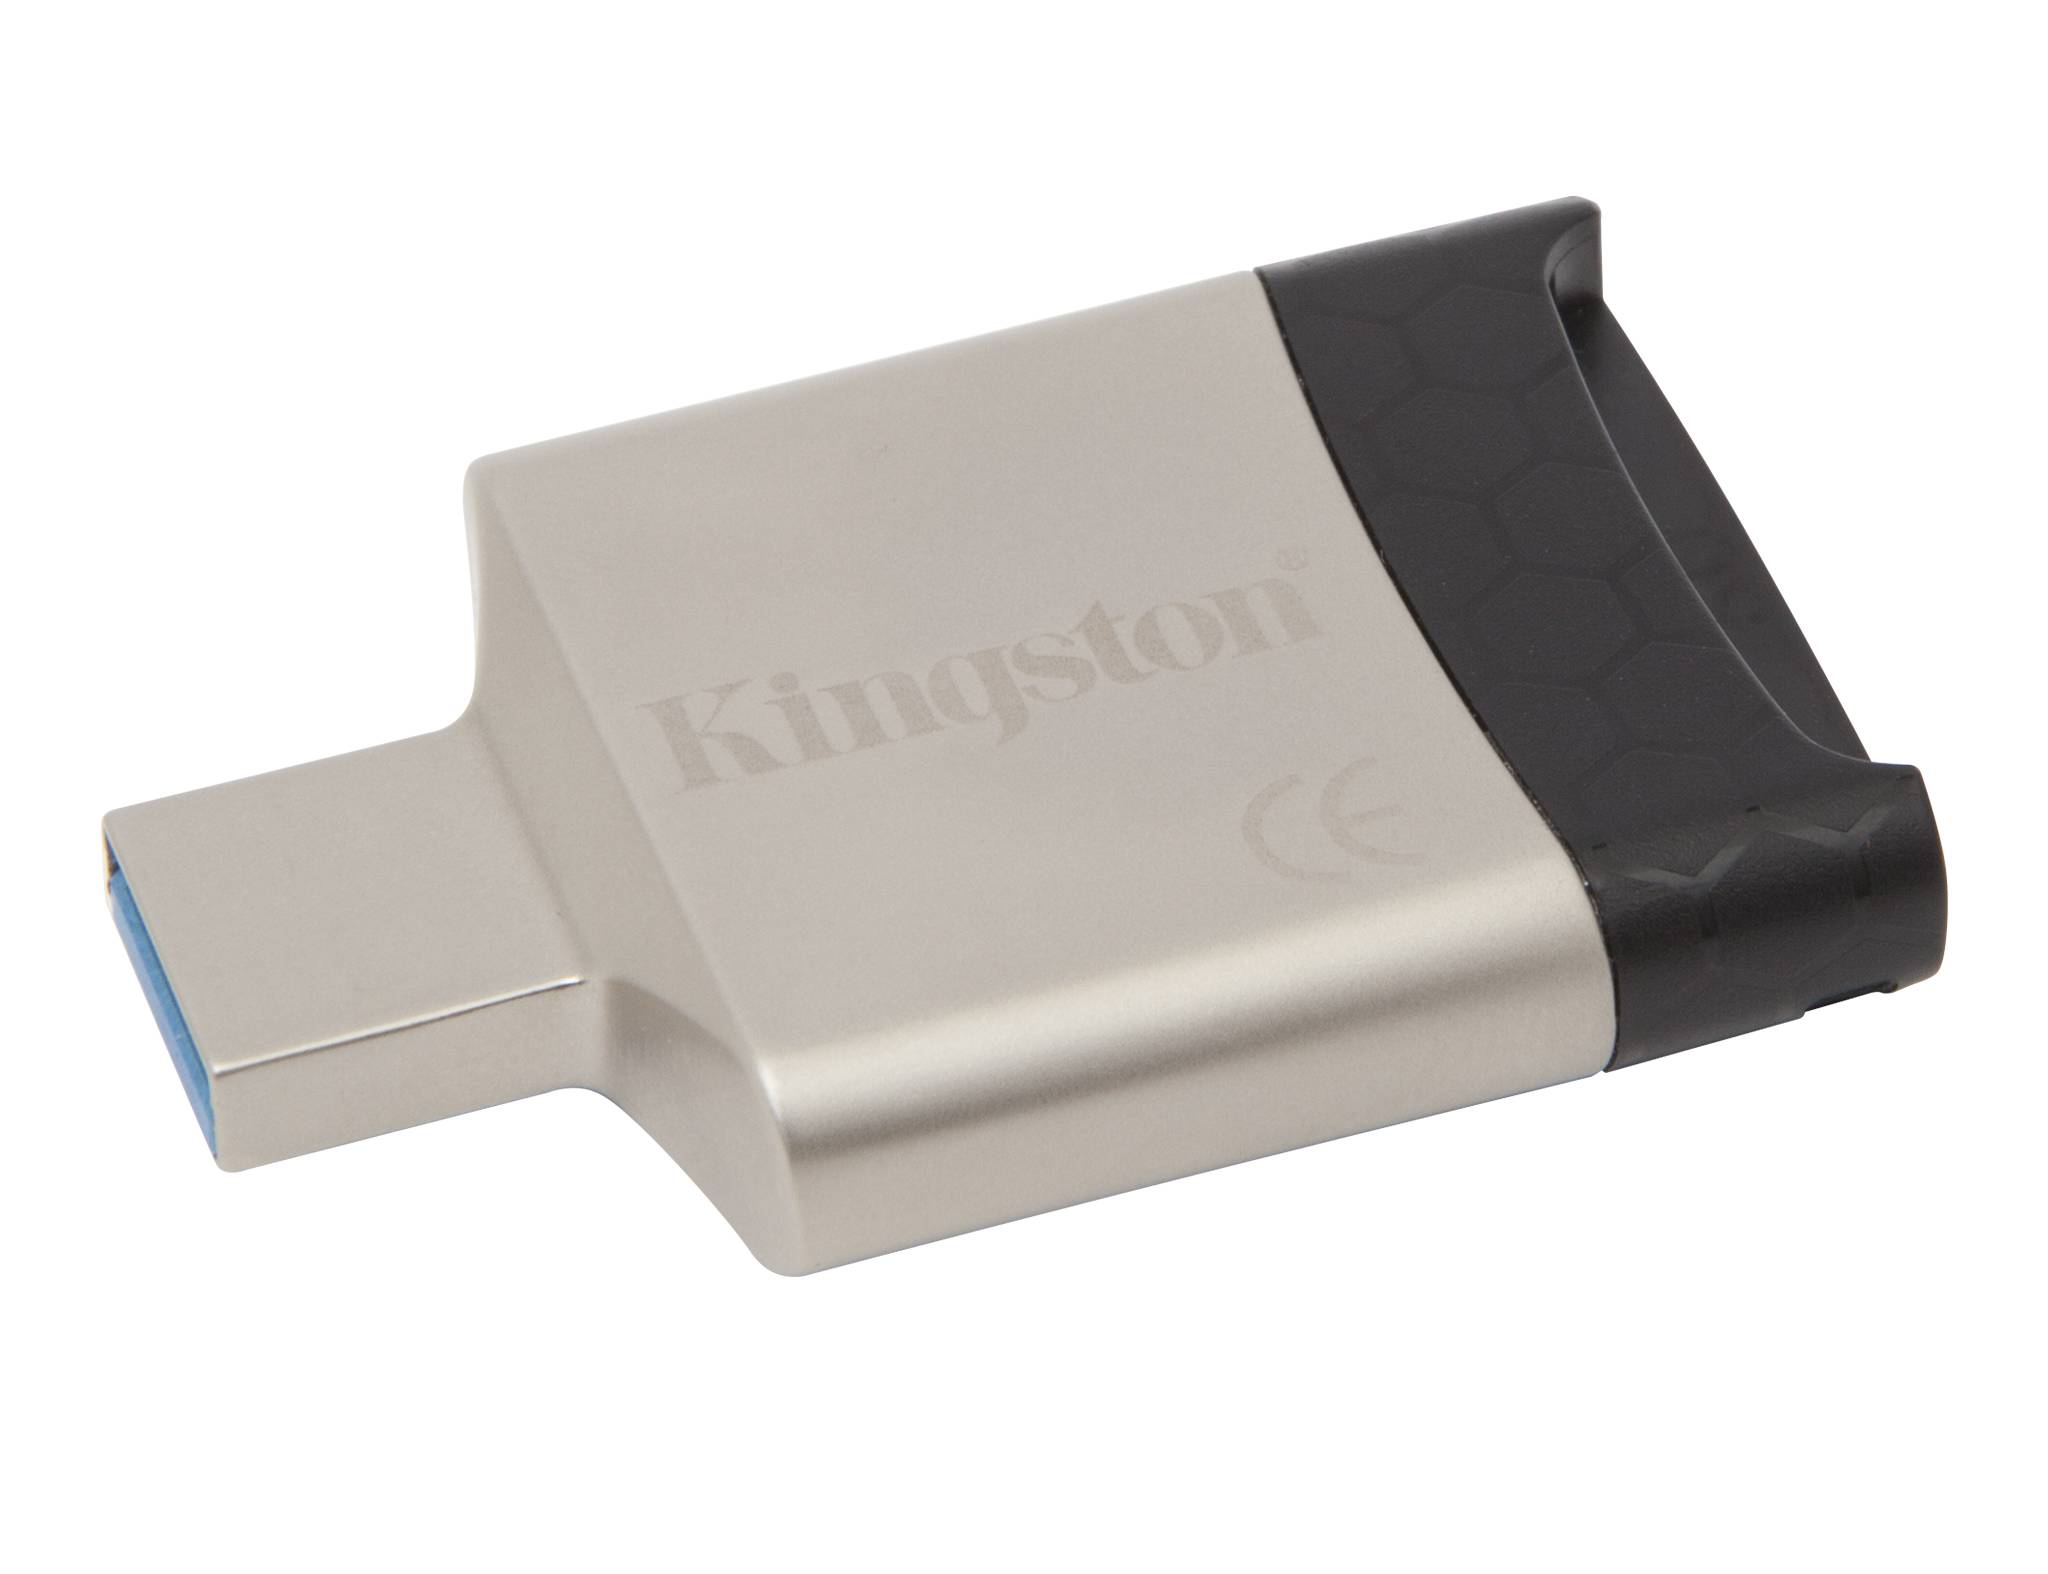 قارئ بطاقات Kingston MobileLite G4 USB 3.0: قوي وموثوق و UHS-II 154